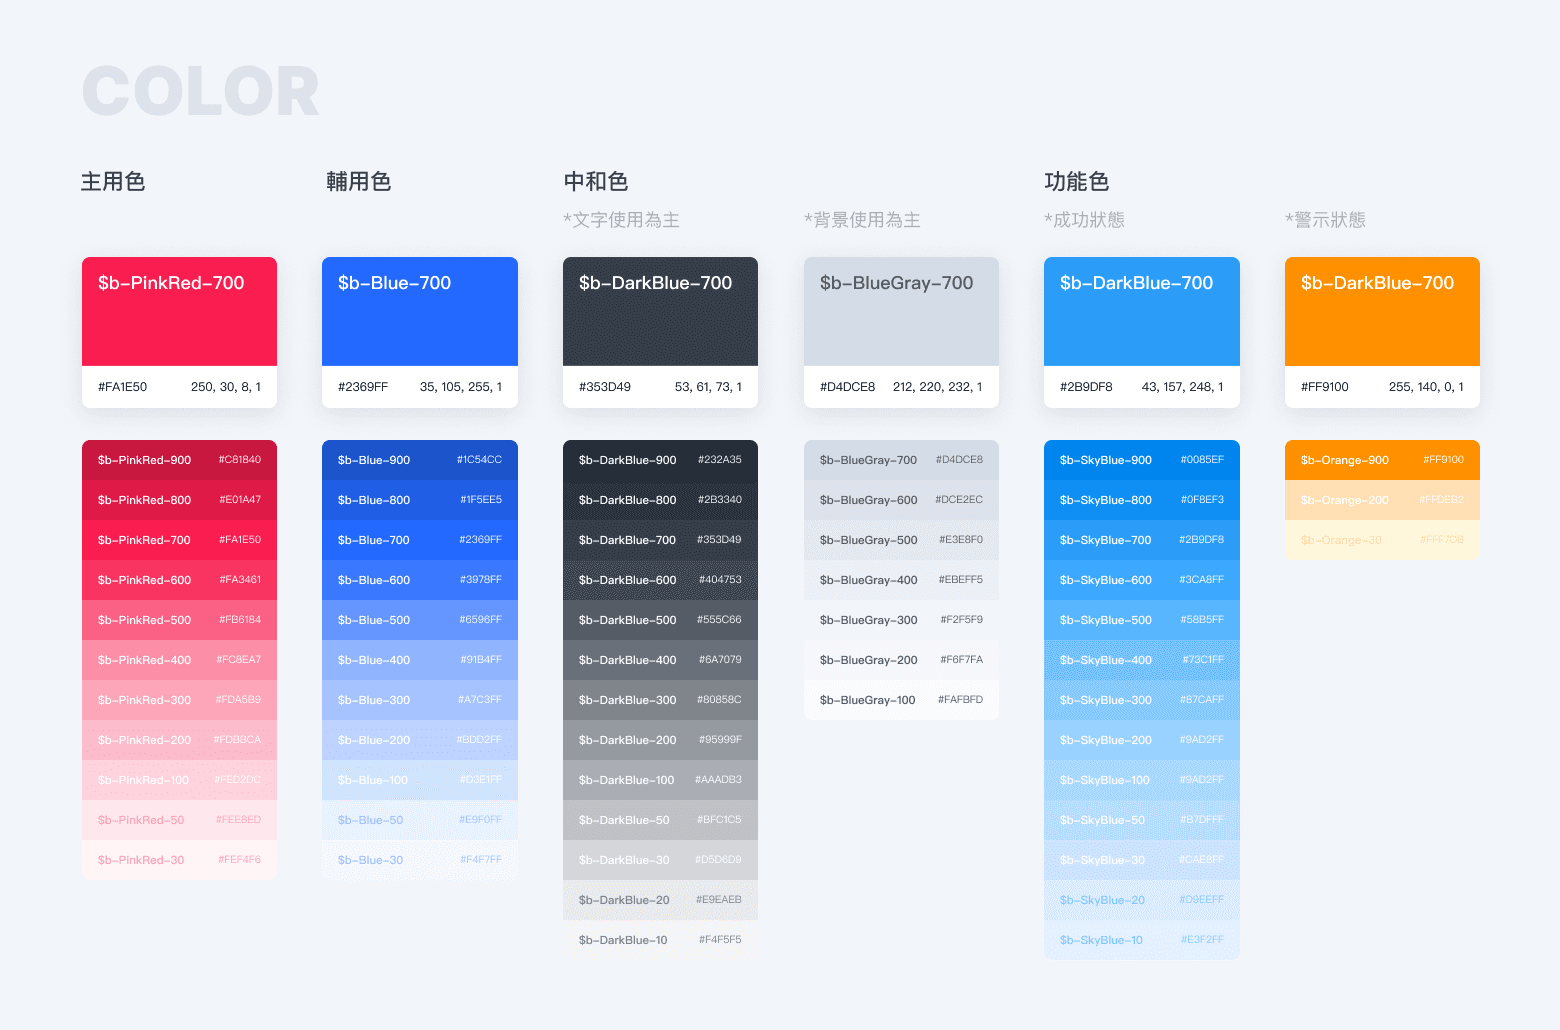 [fig7] After-設計系統-Color